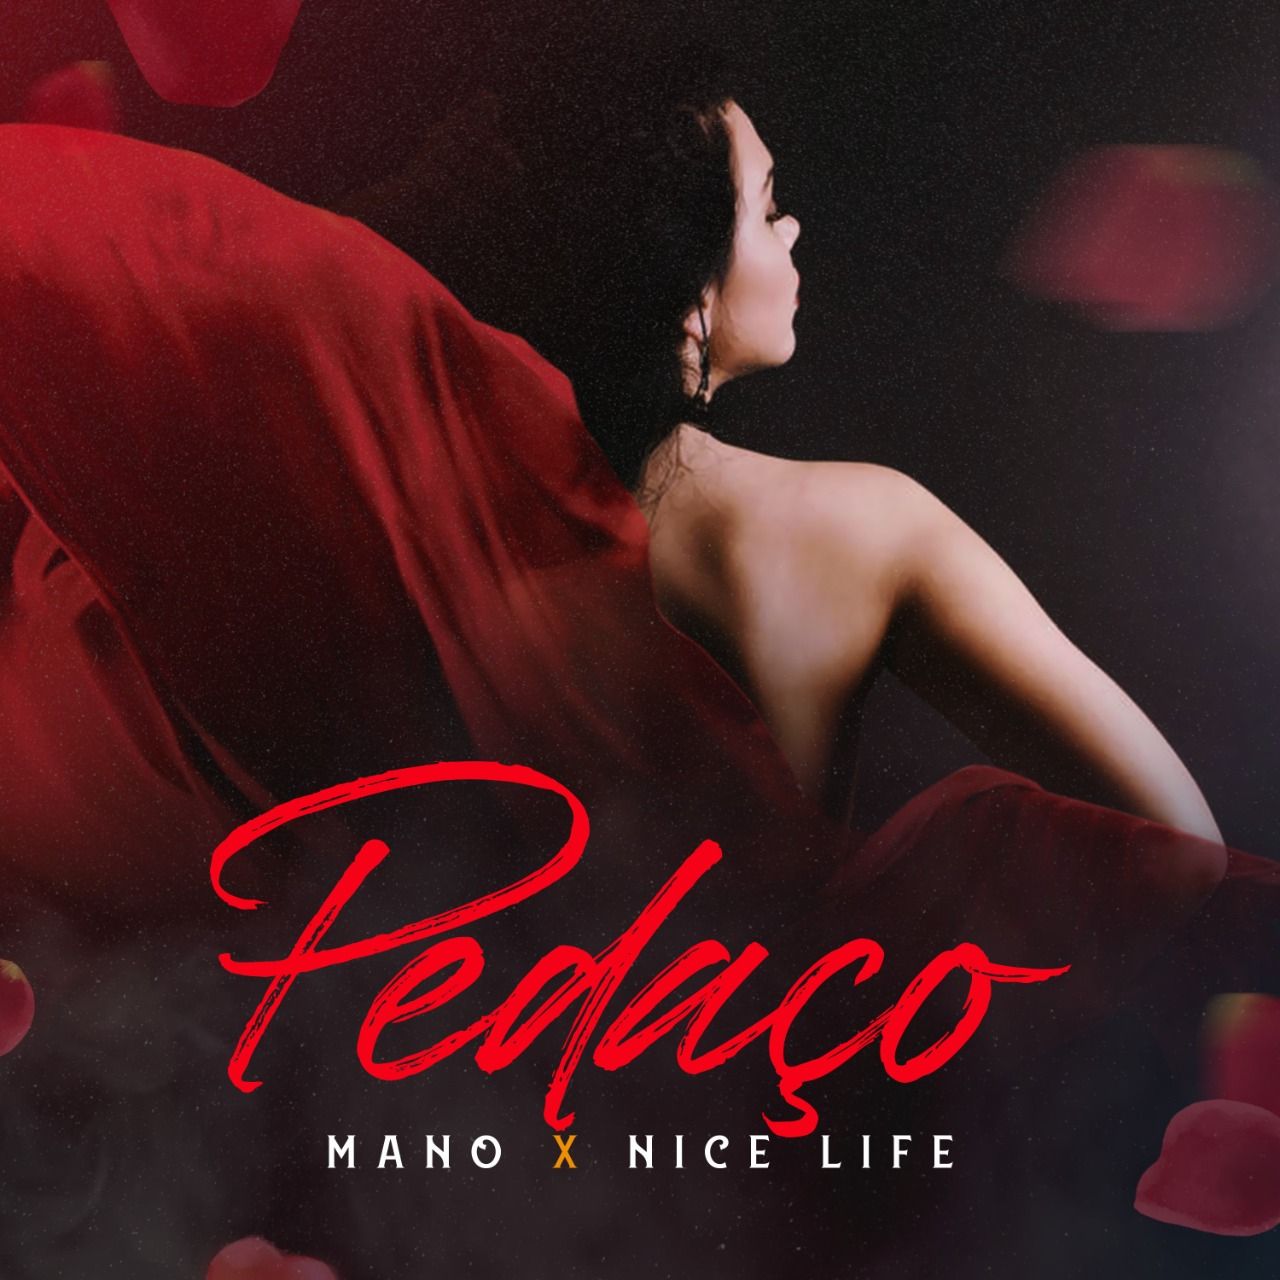 I-download Mano X Nice Life - Pedaco